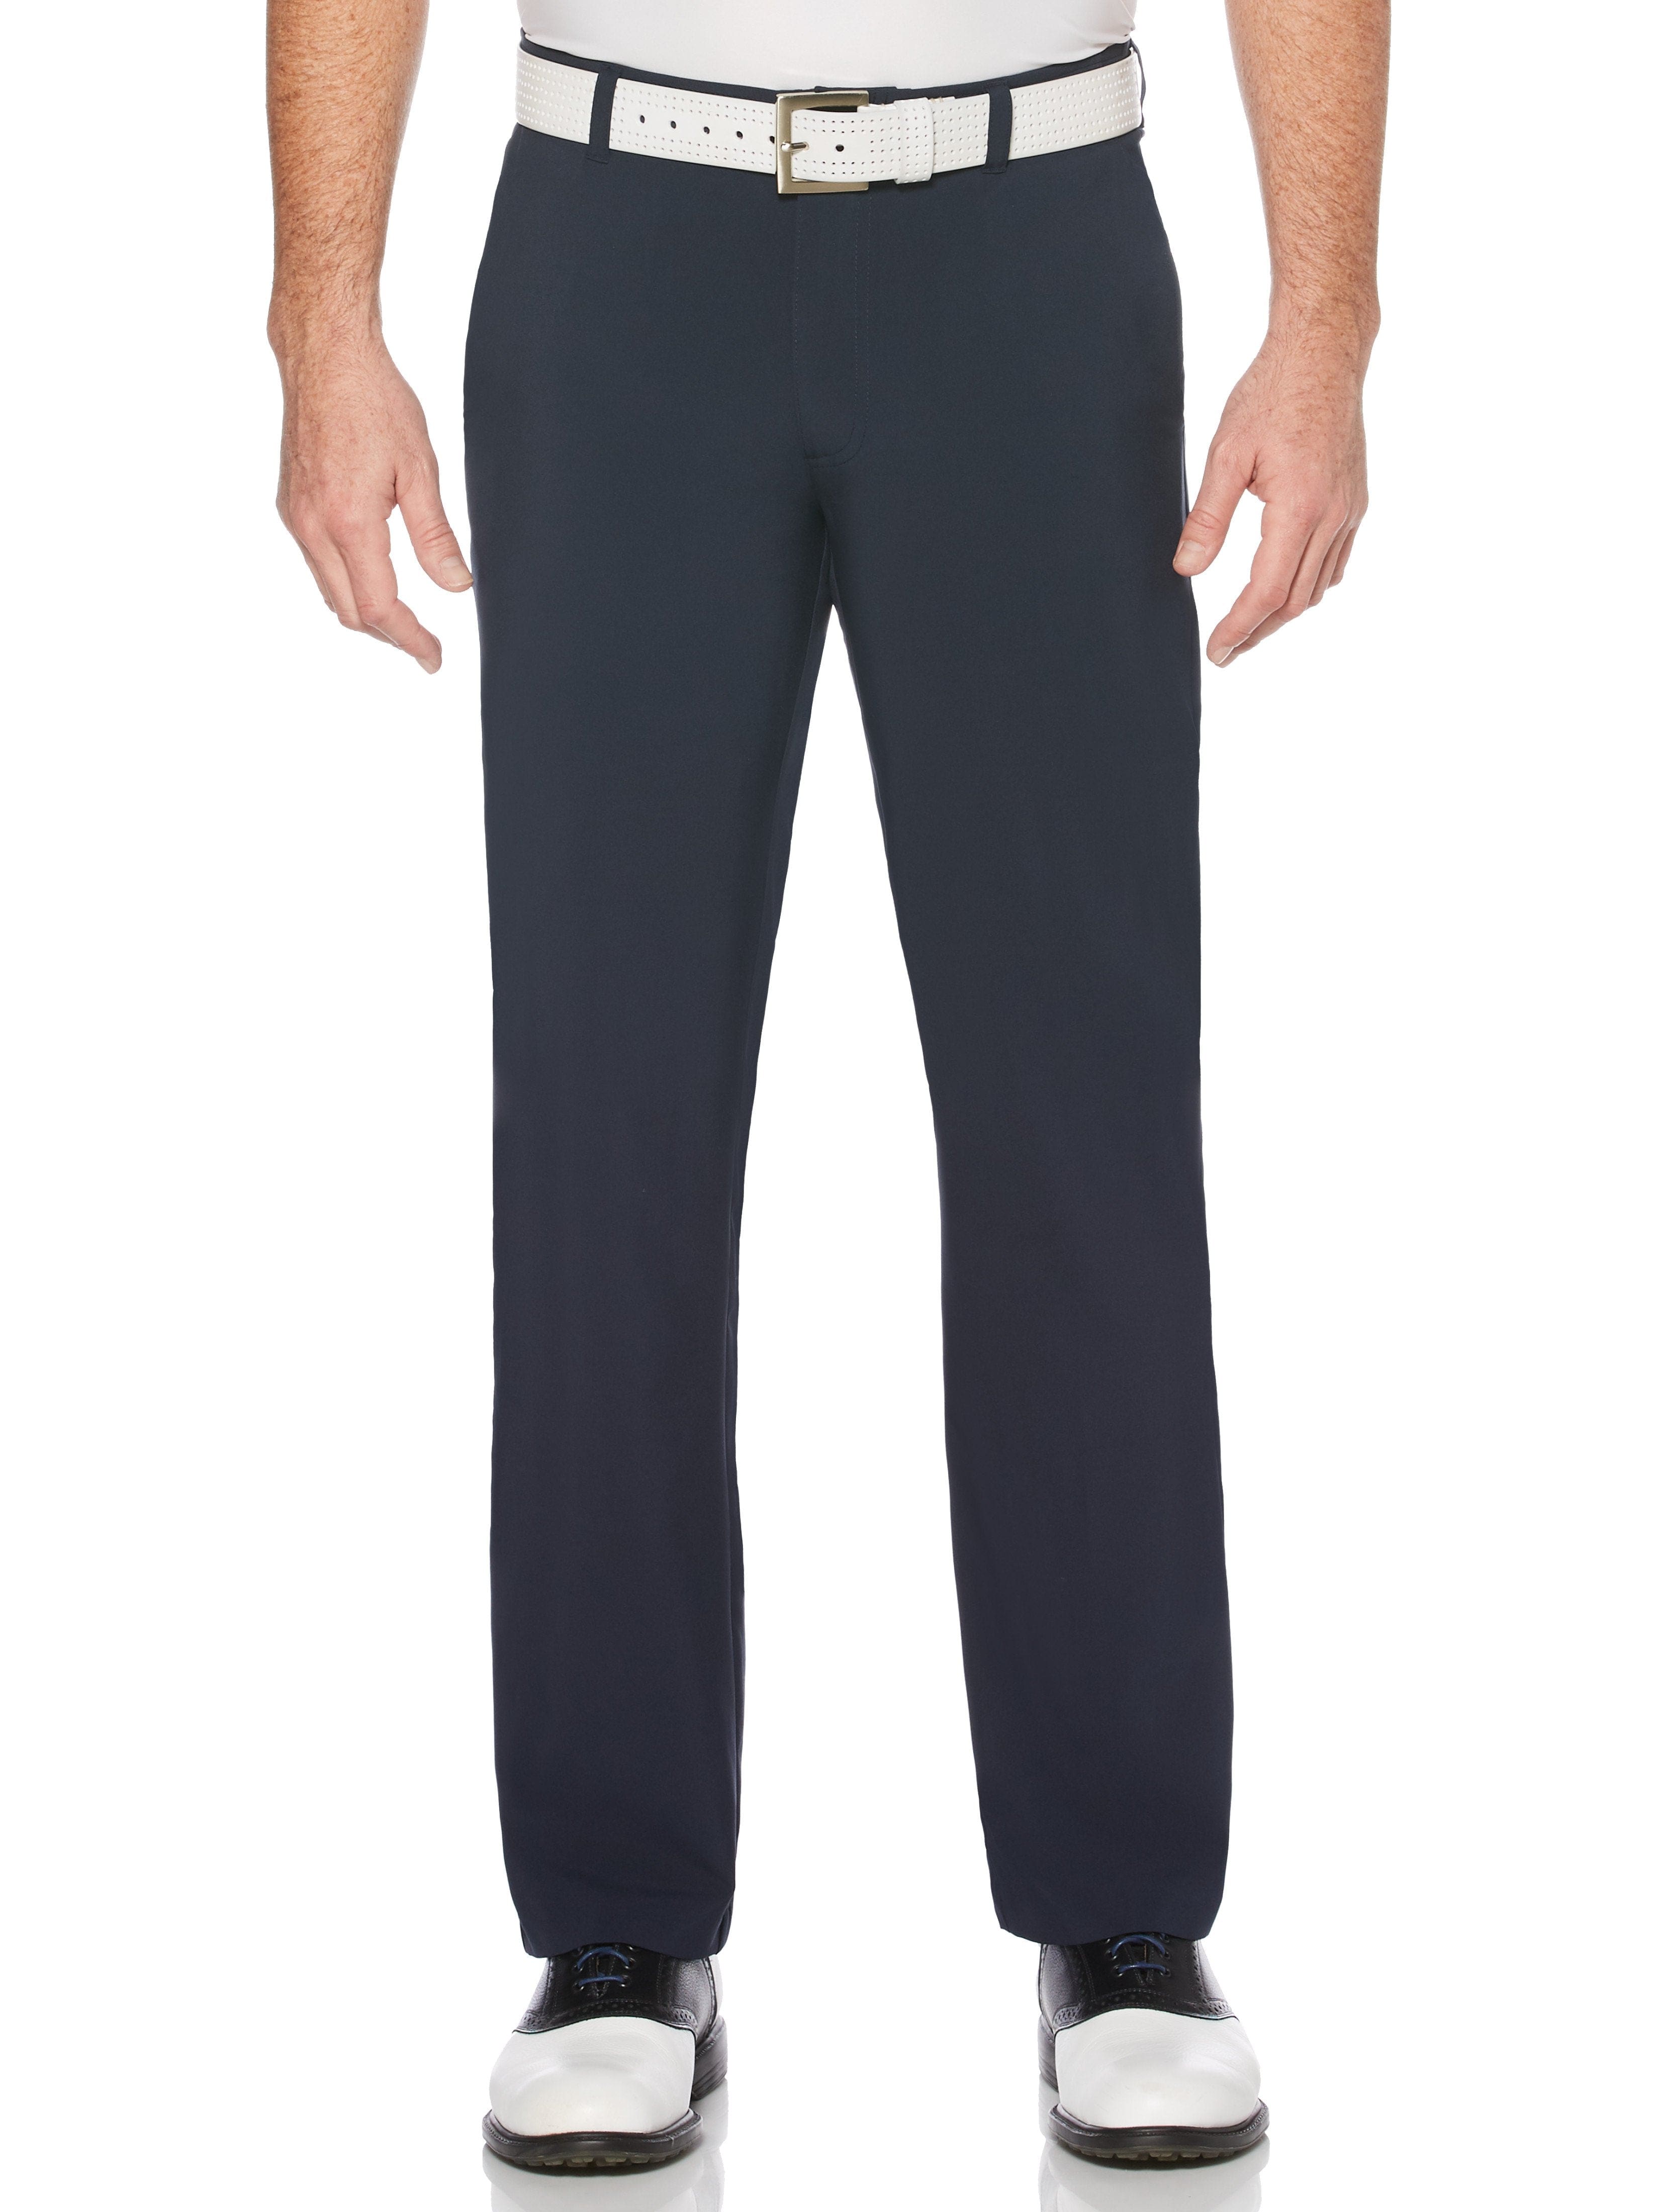 Jack Nicklaus Mens Flat Front Active Flex Pants, Size 44 x 30, Classic Navy Blue, Polyester/Elastane | Golf Apparel Shop